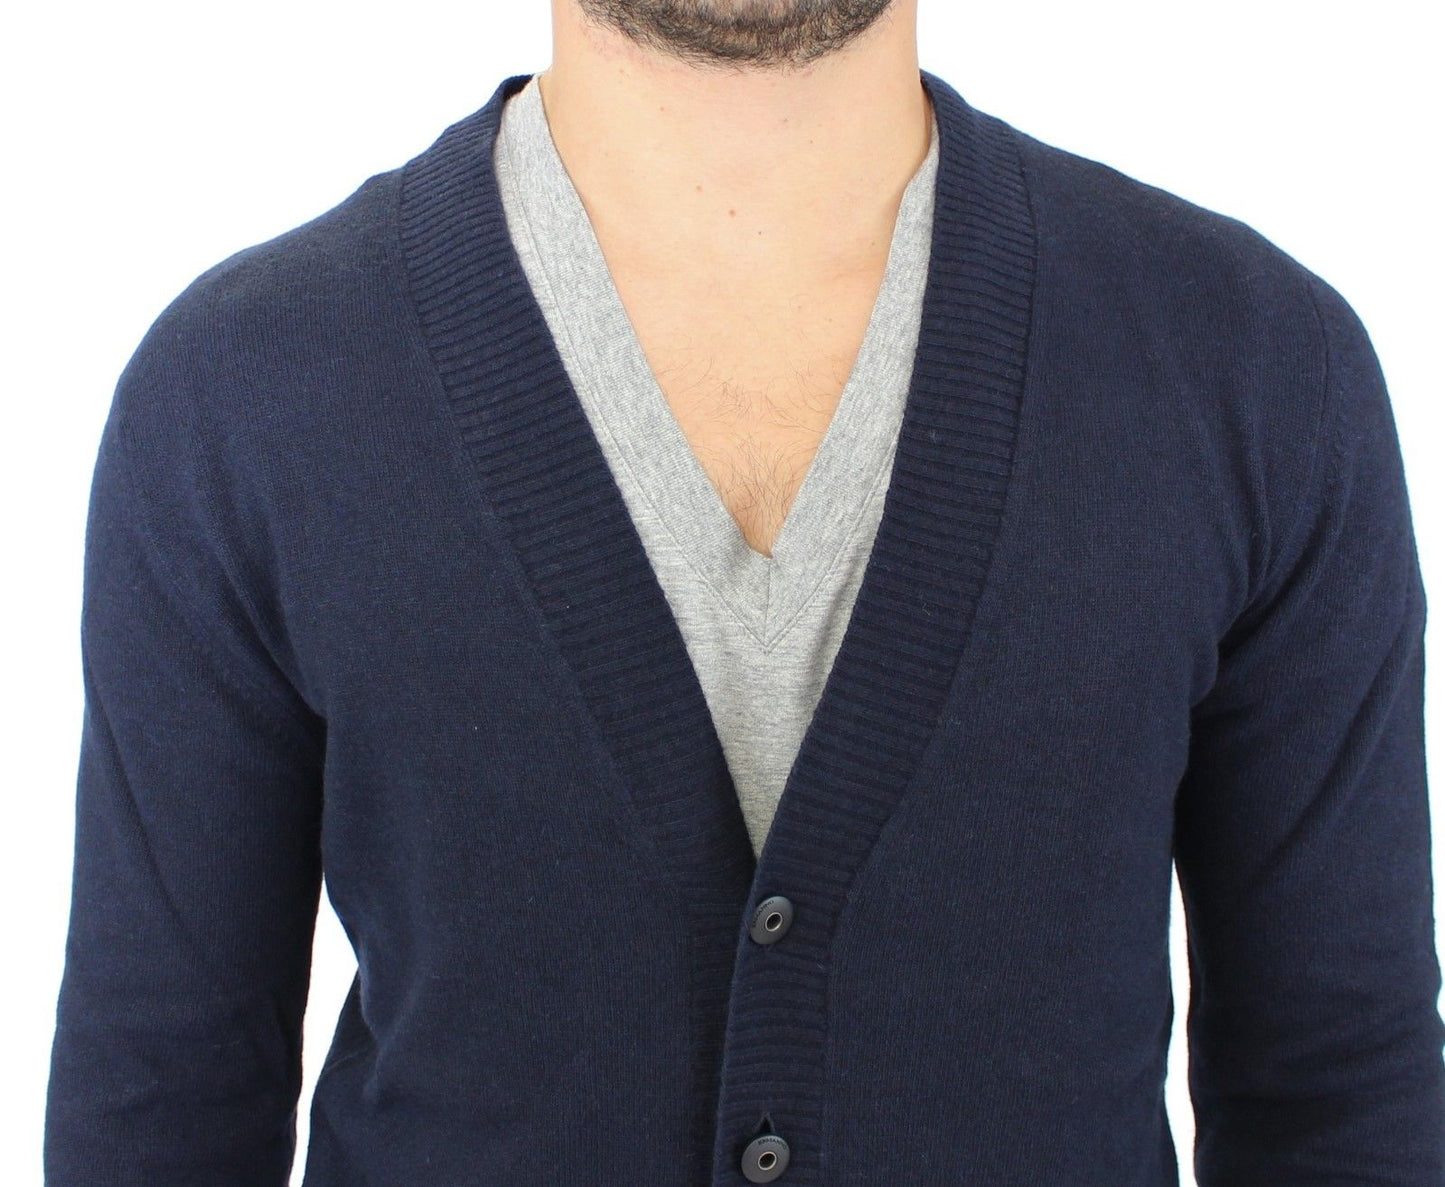 Chic Blue Wool Blend Cardigan Sweater